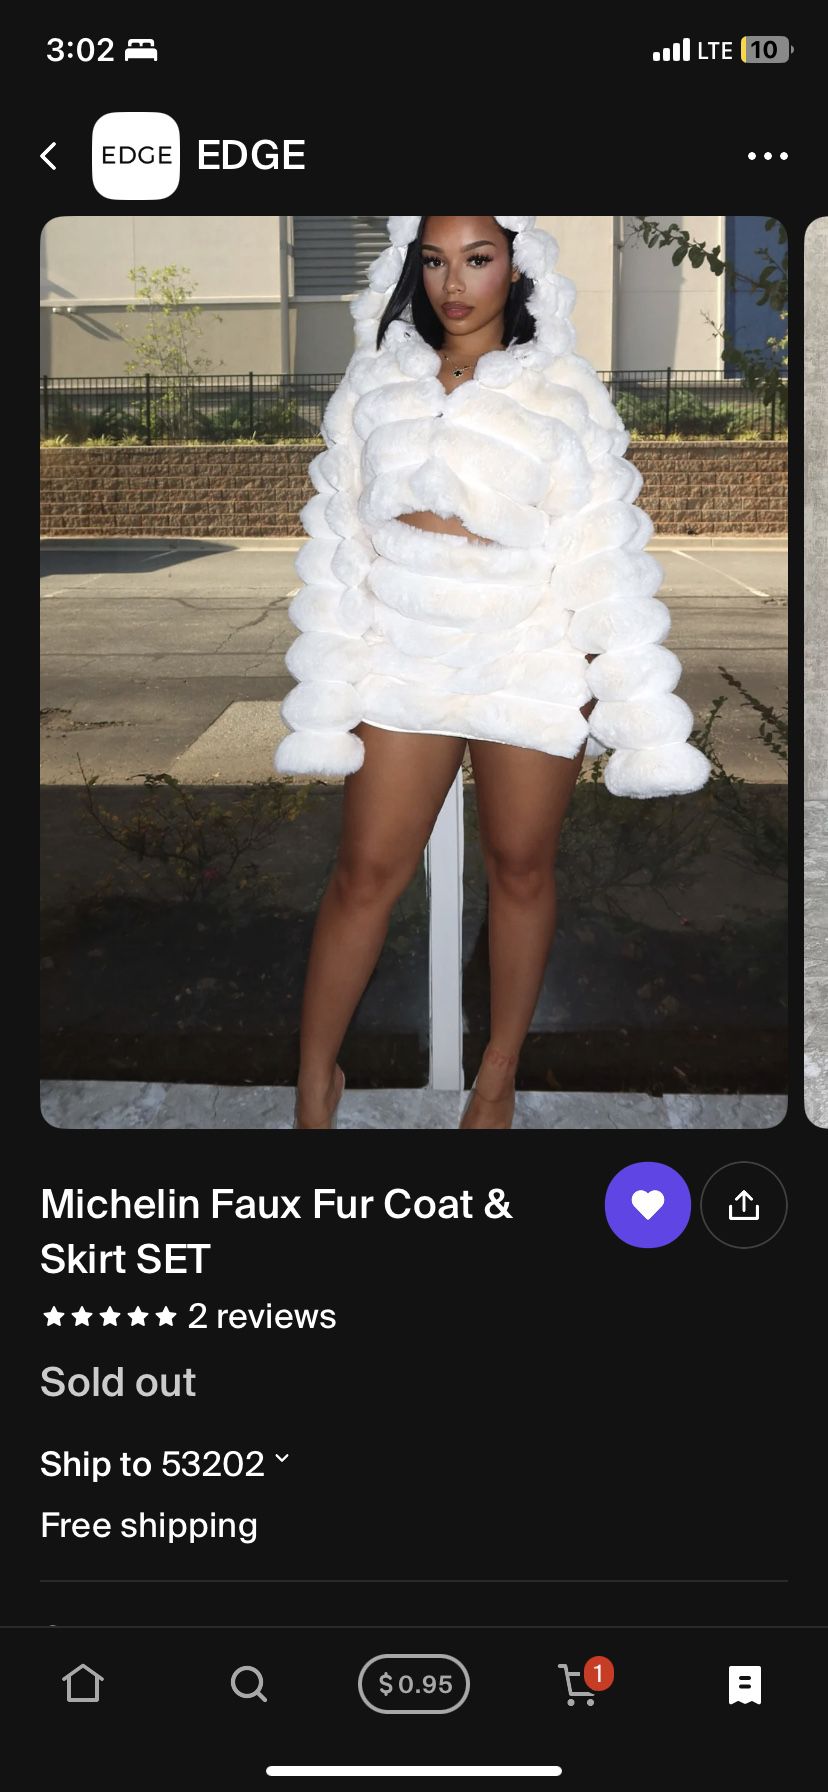 Michelin Faux Fur Coat & Skirts SET